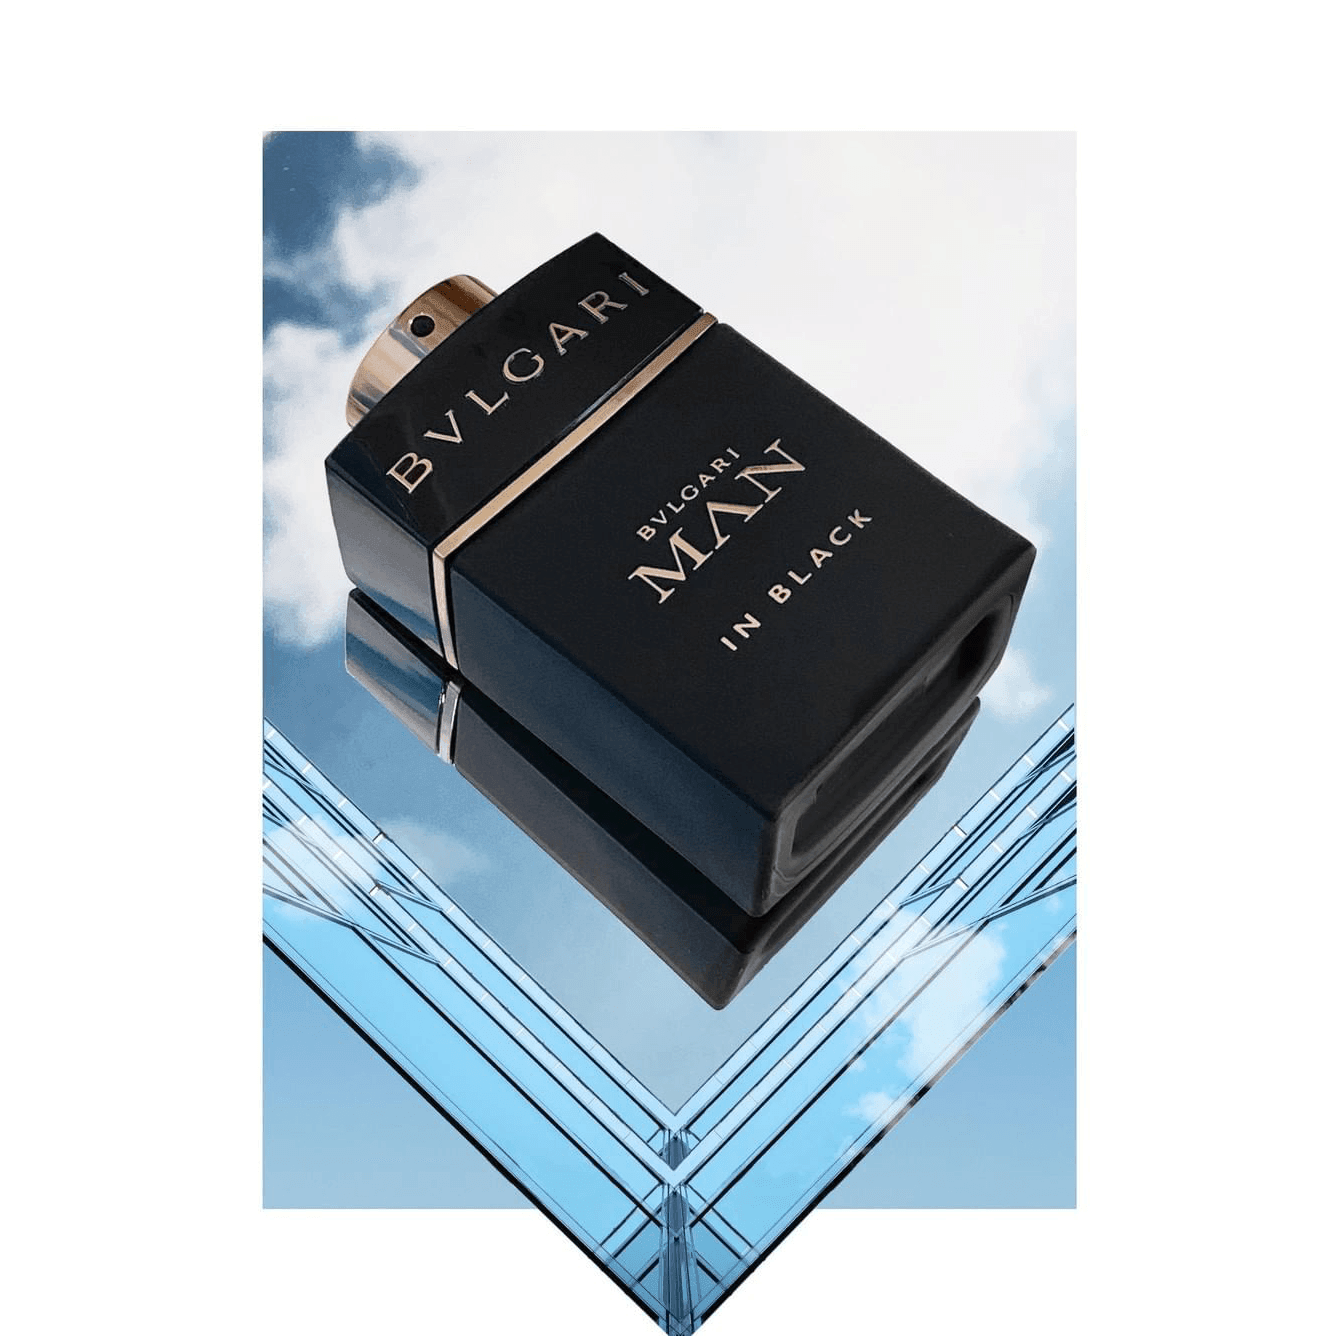 Bvlgari Man In Black Aftershave Balm - My Perfume Shop Australia